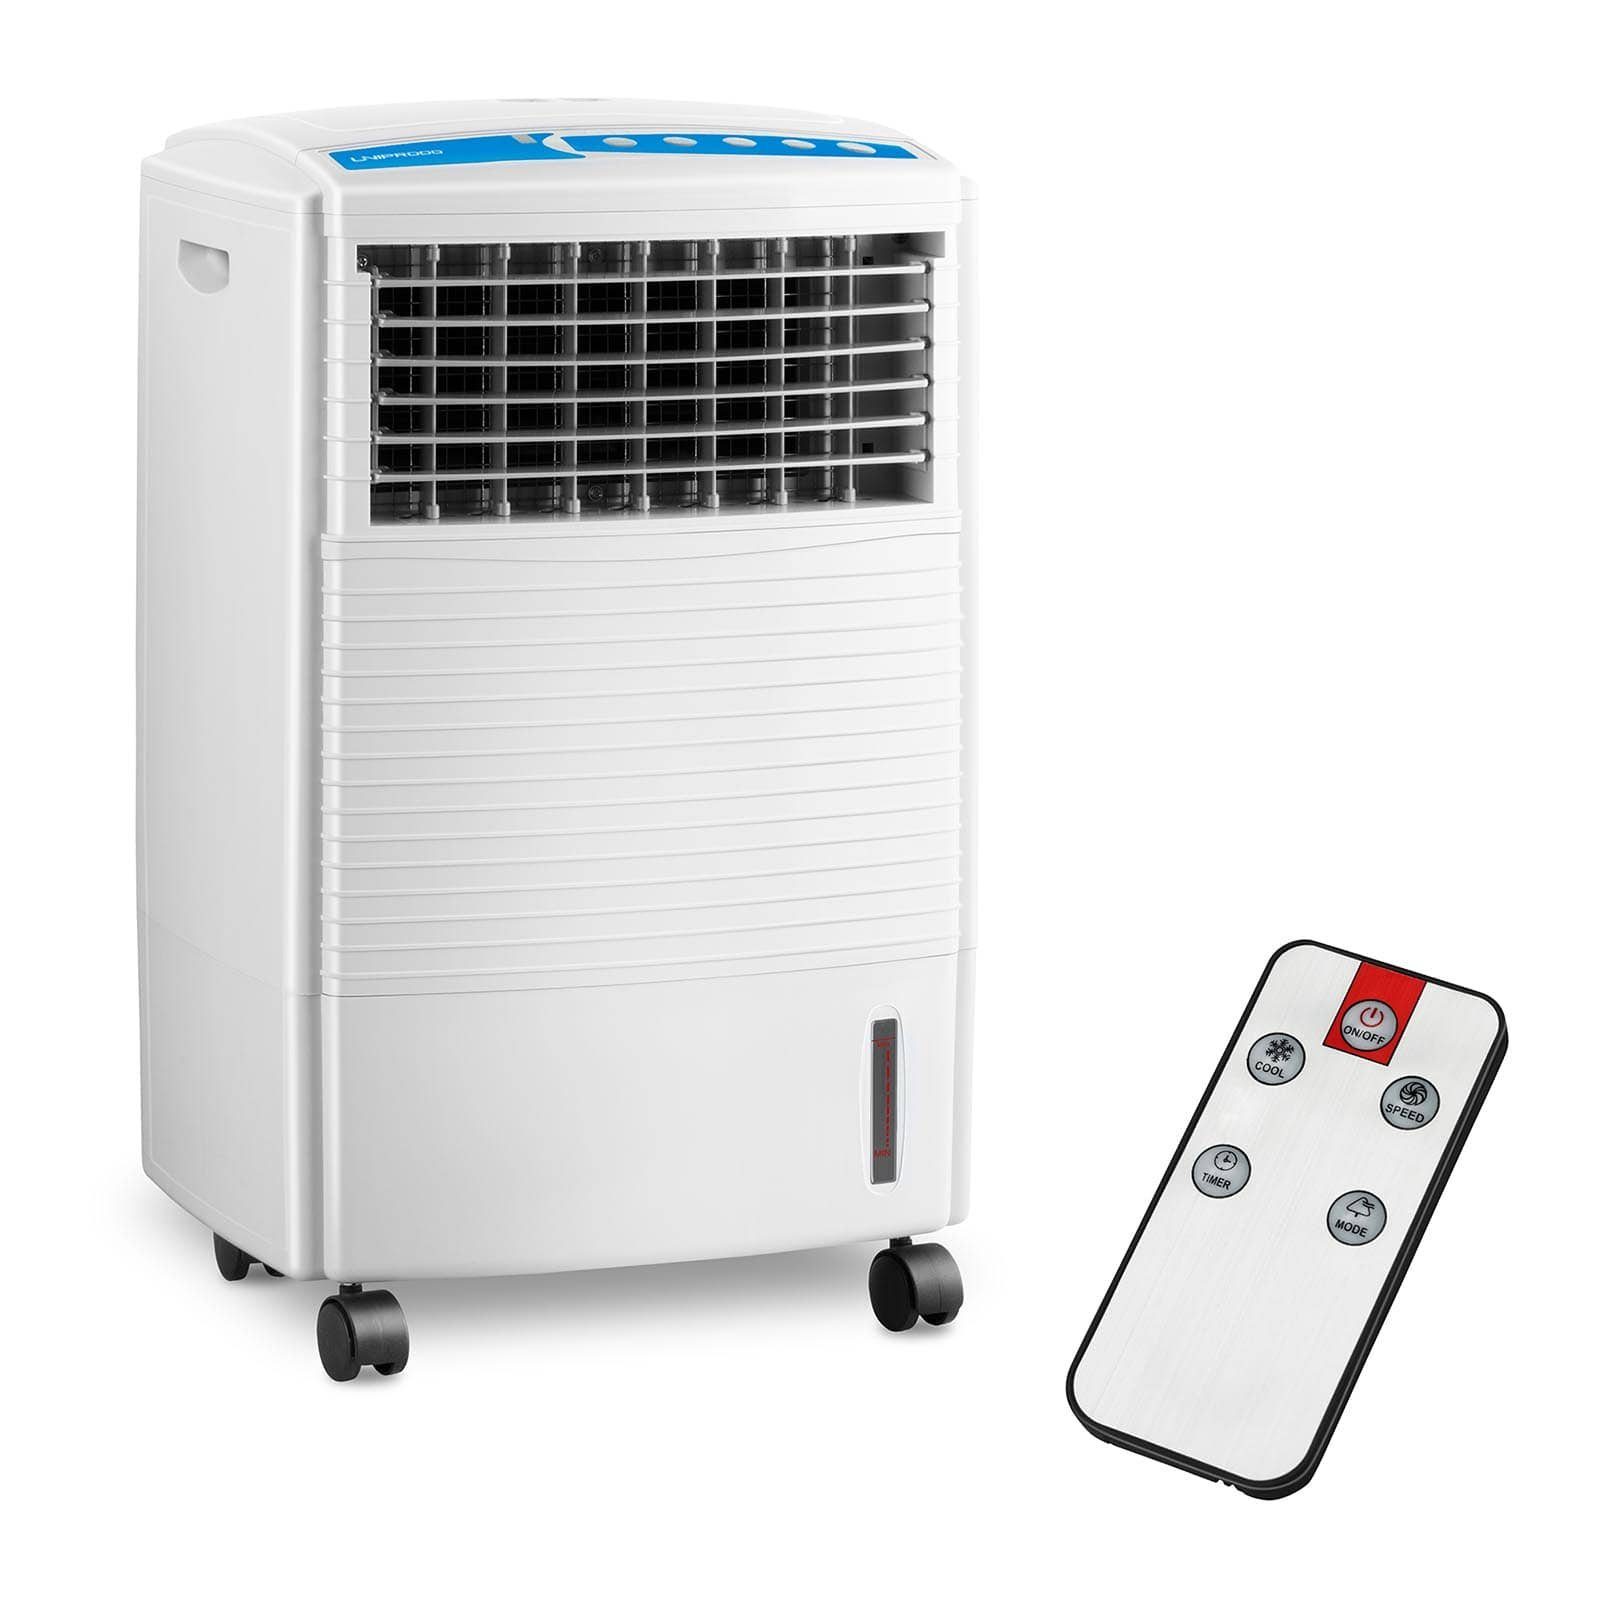 Uniprodo Ventilatorkombigerät Luftkühler Mobil - 3 In 1 - 10 L Wassertank Klimagerät Luftreiniger